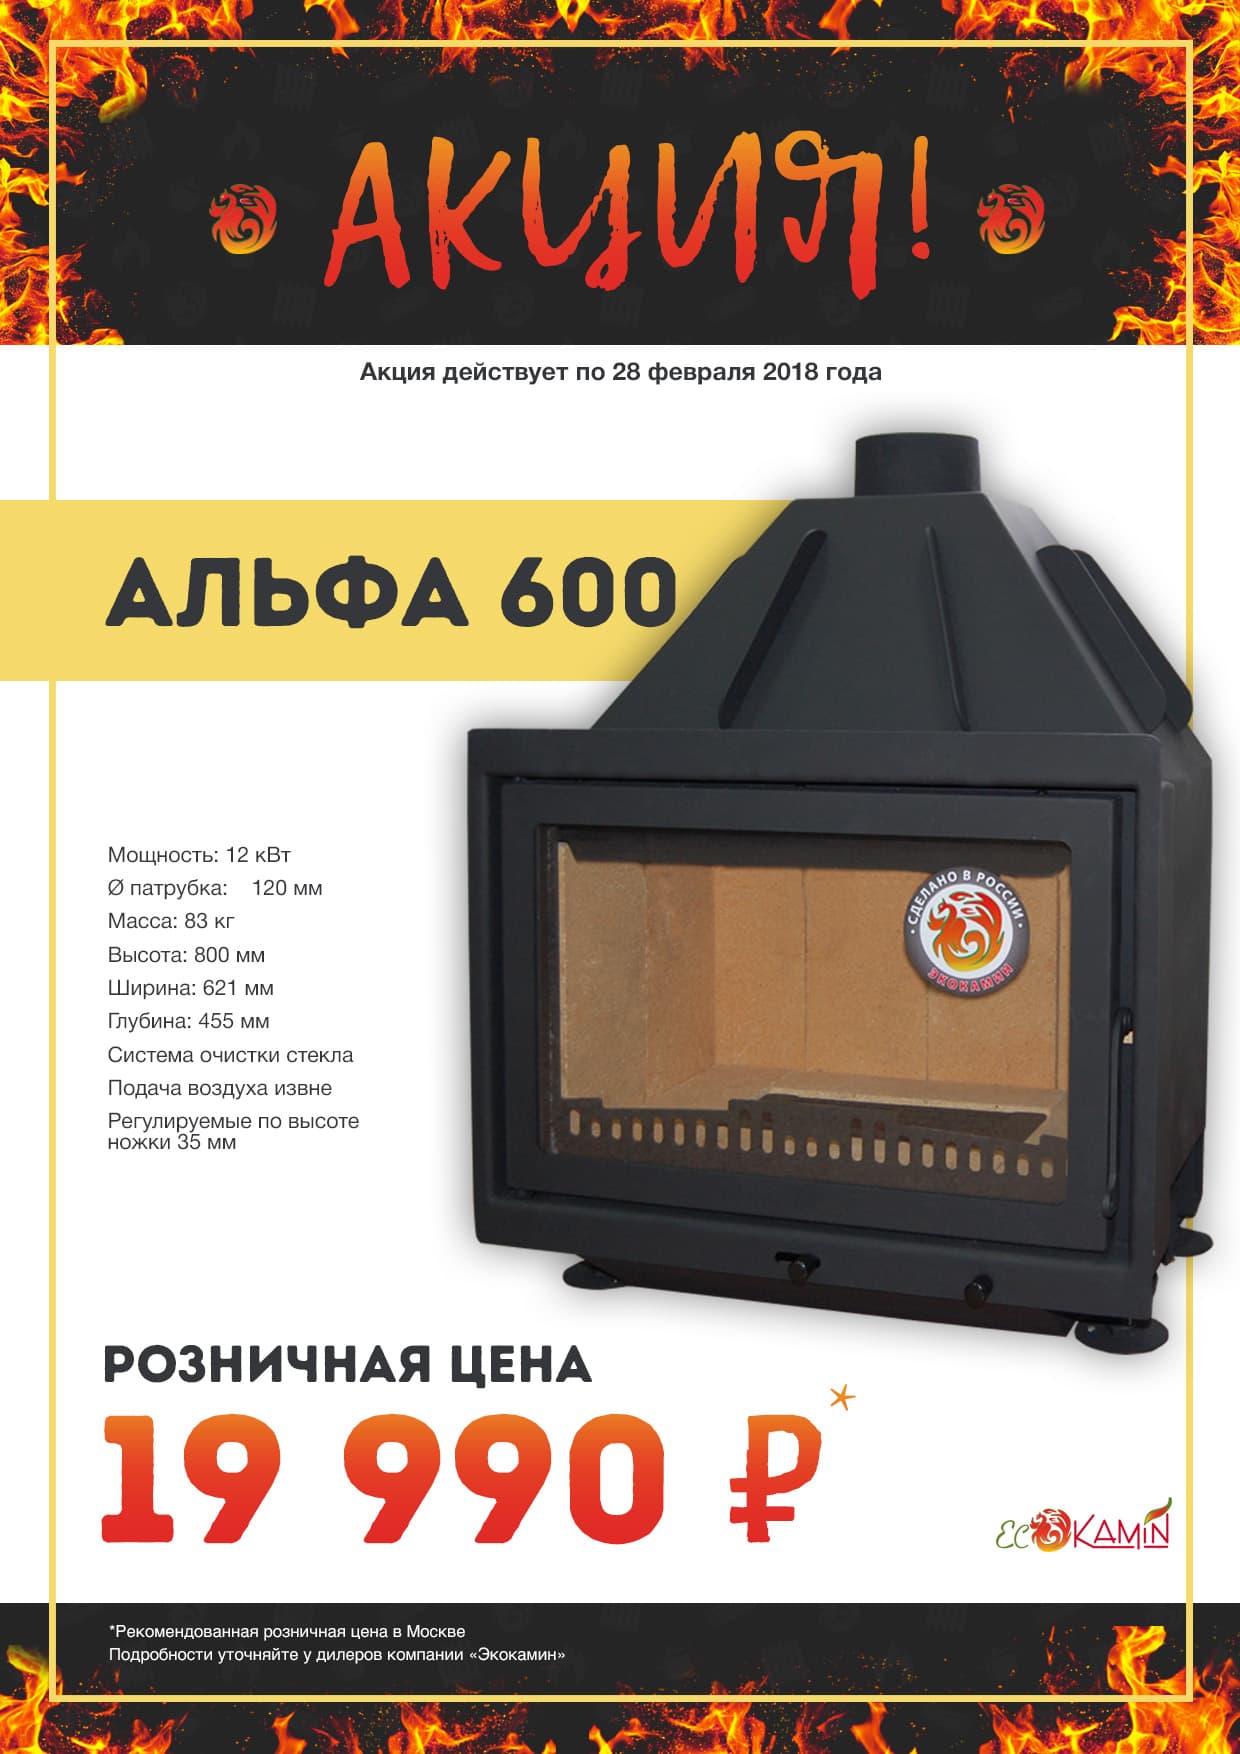 Акция: Альфа 600 за 19 990 рублей!